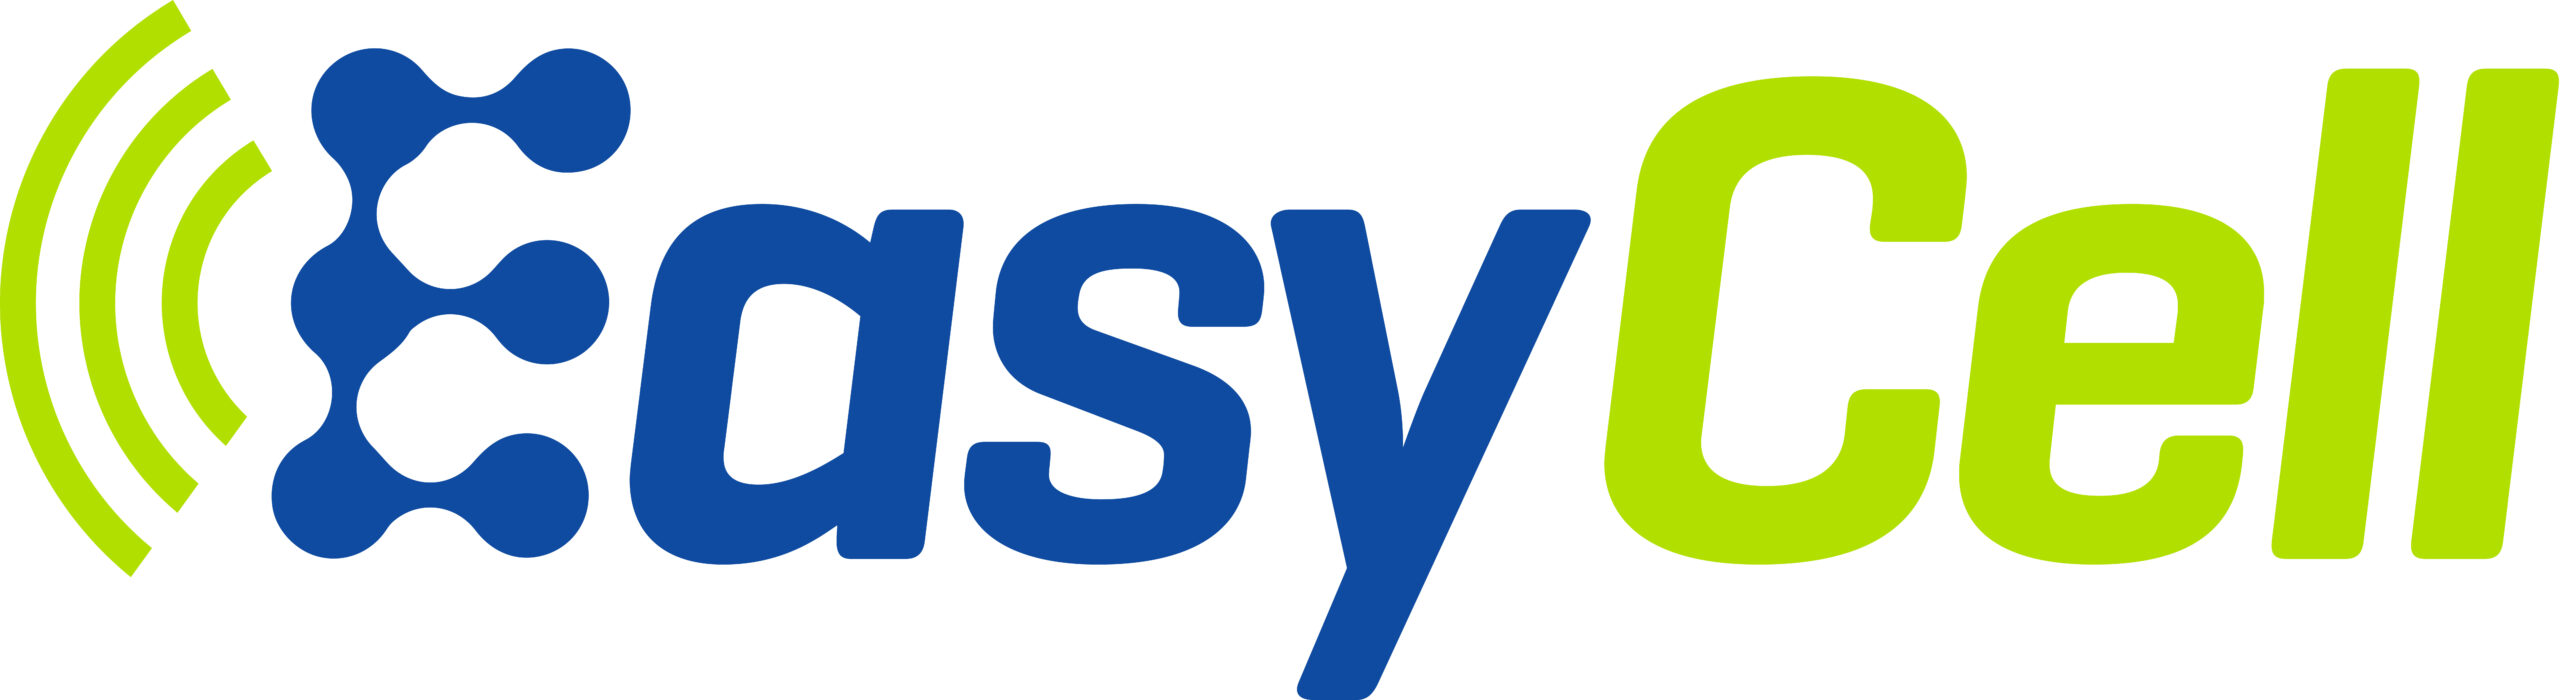 EasyCell Co., Ltd